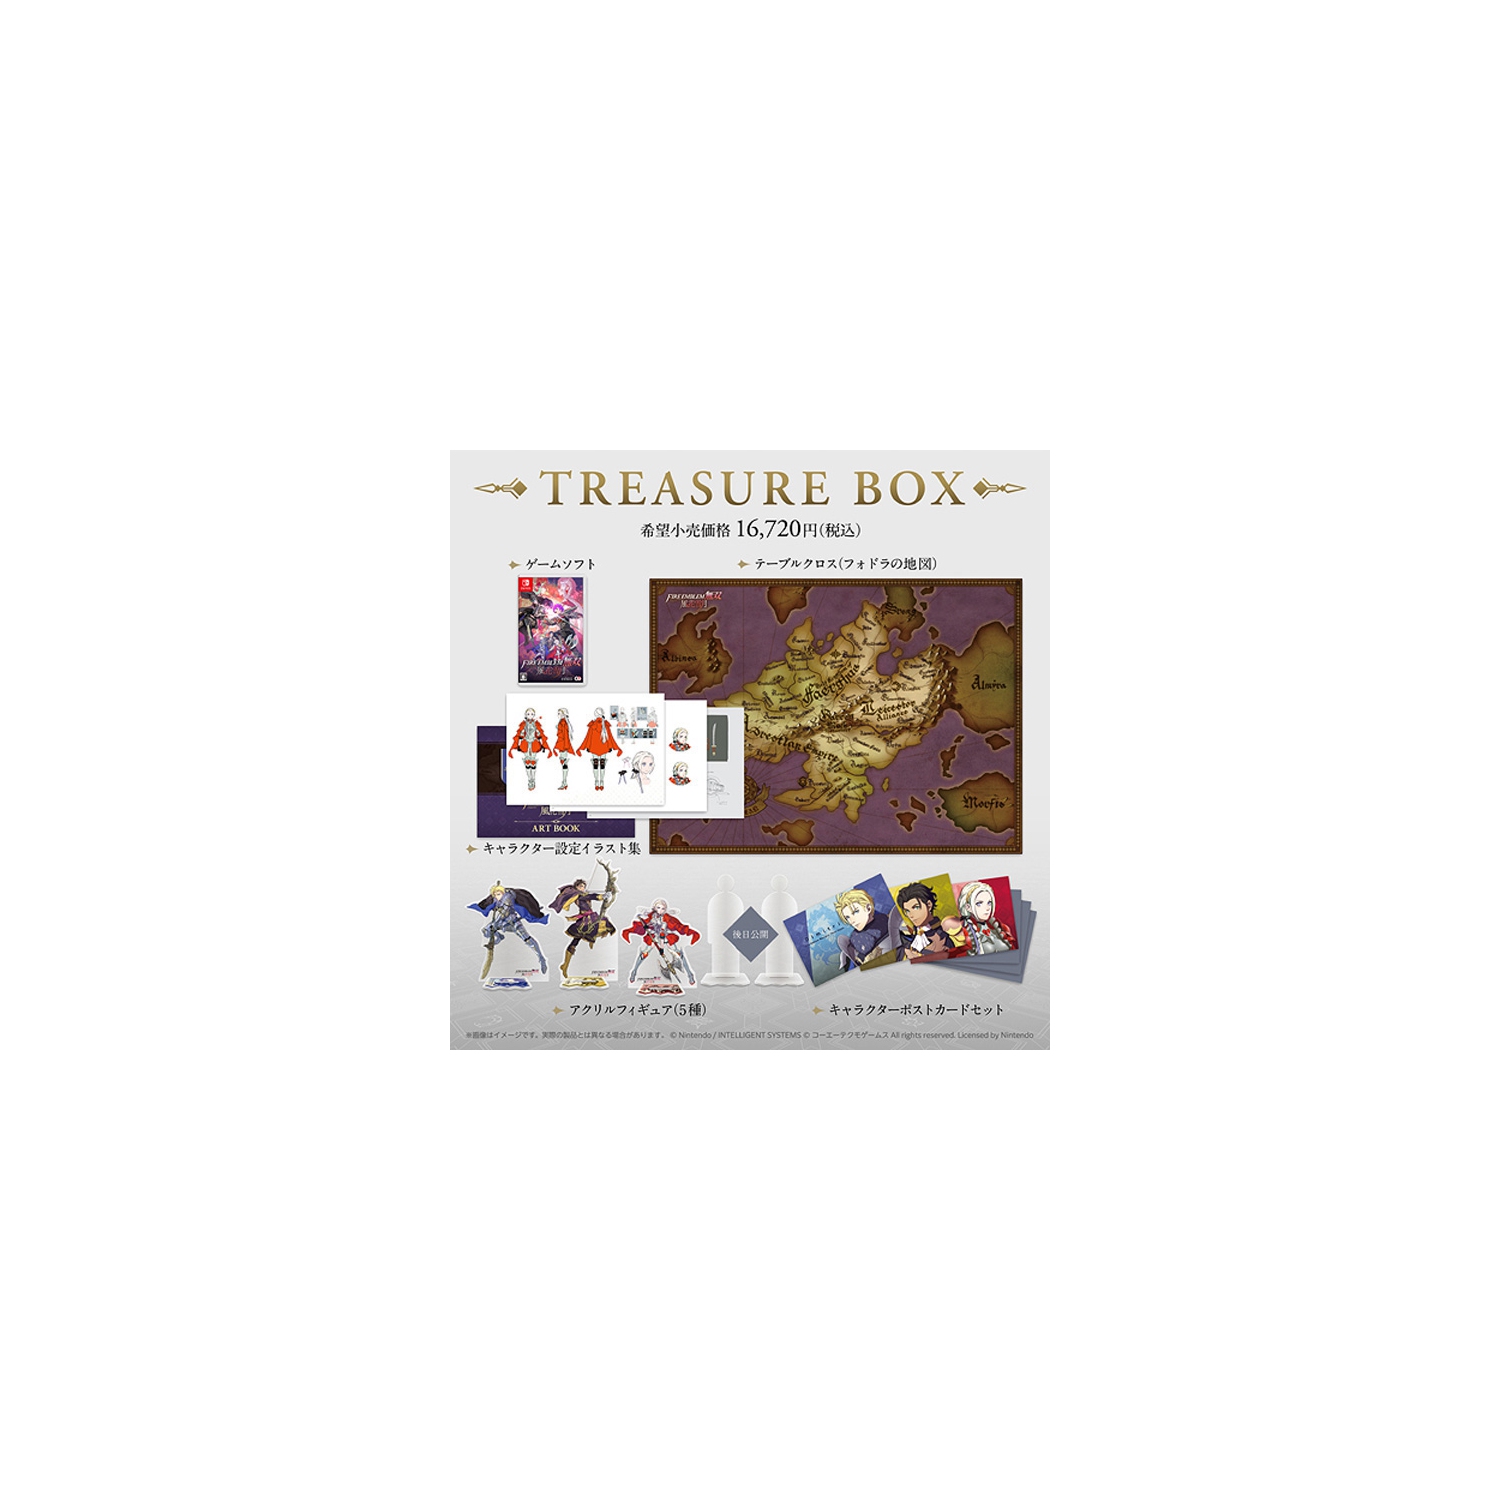 Fire Emblem Warriors Three Hopes Treasure Box Limited Edition (Jpim) (Eng) (Ninendo Switch)